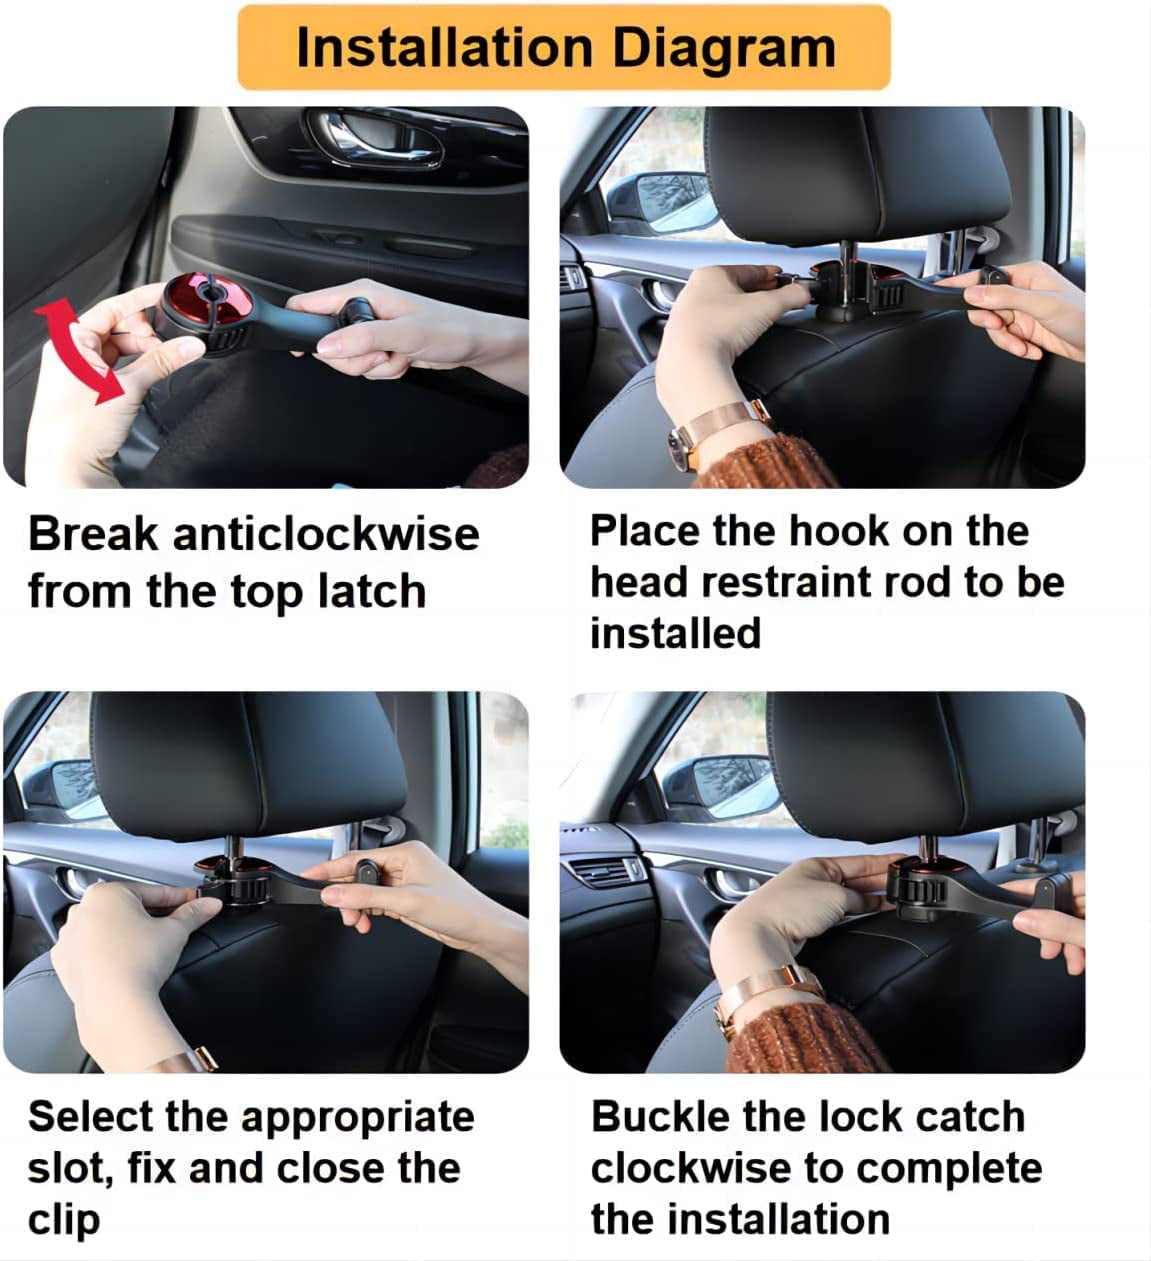  SCOVVORD Car Headrest Hidden Hook with Phone Holder